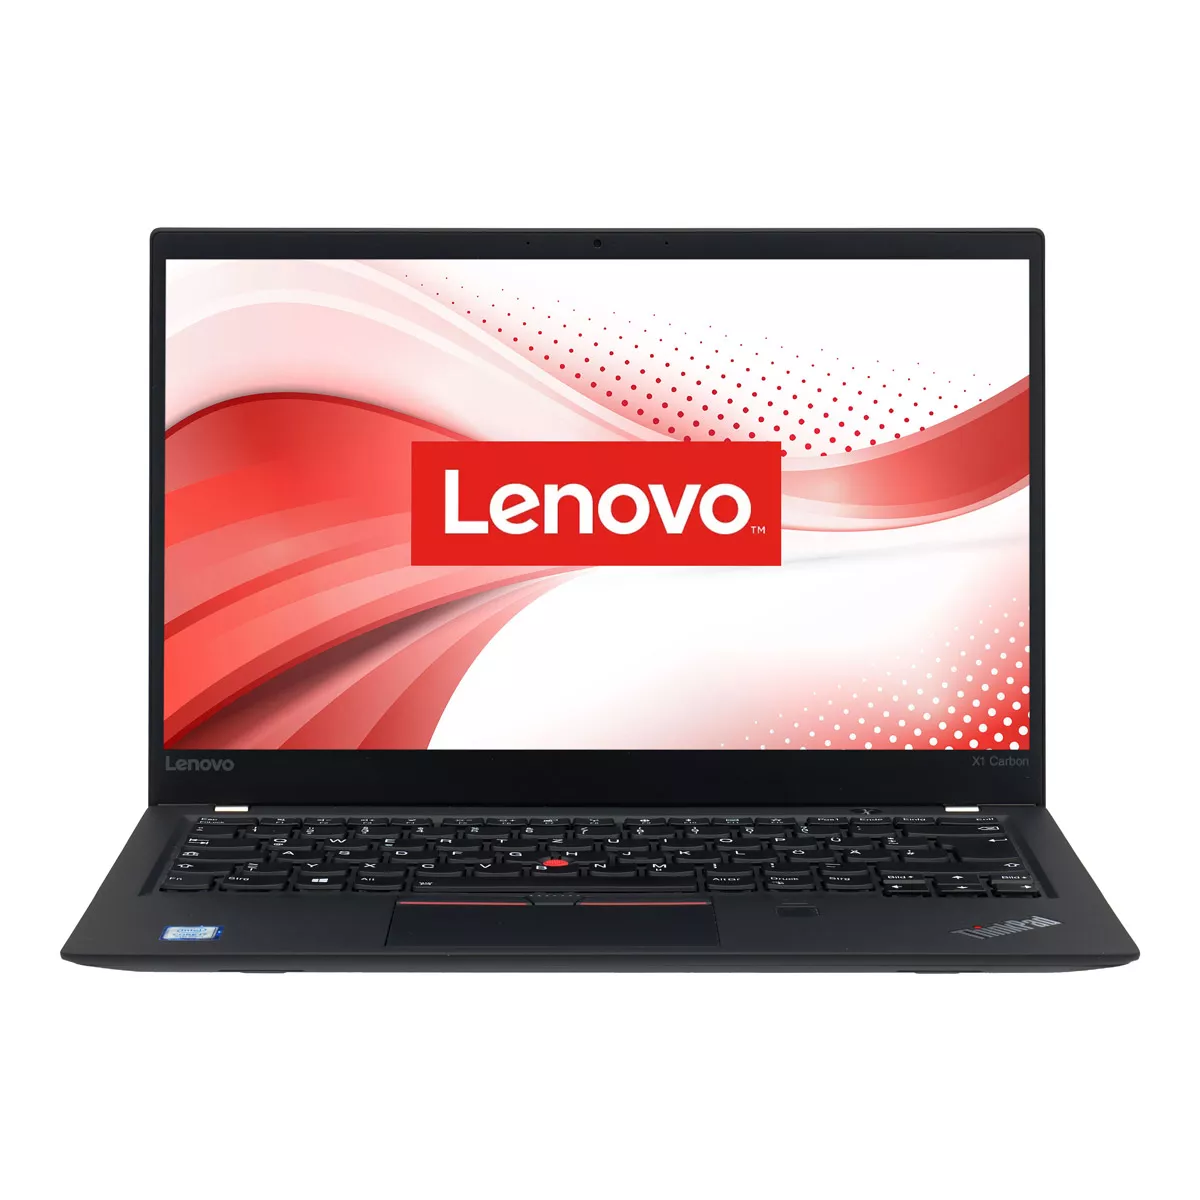 Lenovo ThinkPad X1 Carbon G5 Core i7 7500U 16 GB 240 GB Webcam A+